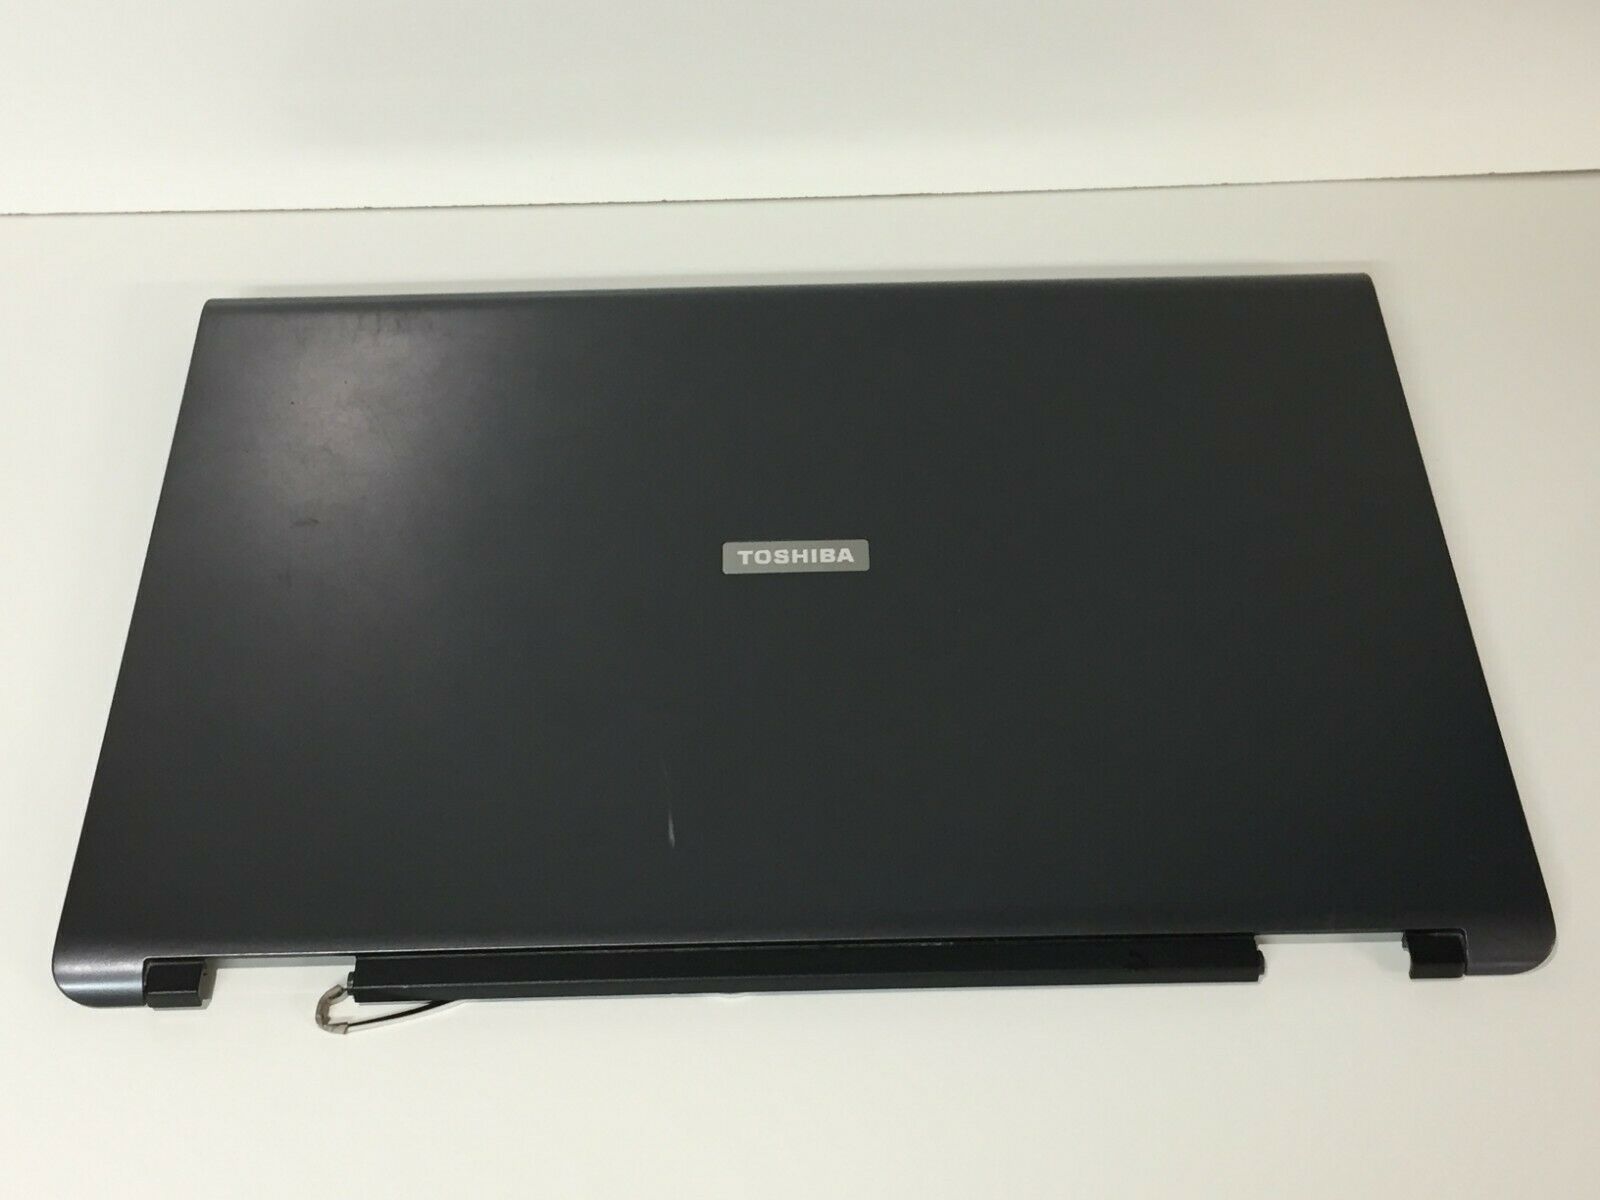 Toshiba Satellite P105-S6004 17" Laptop back cover 3DBD1LC0I89 3DBD1LC0 - $15.98